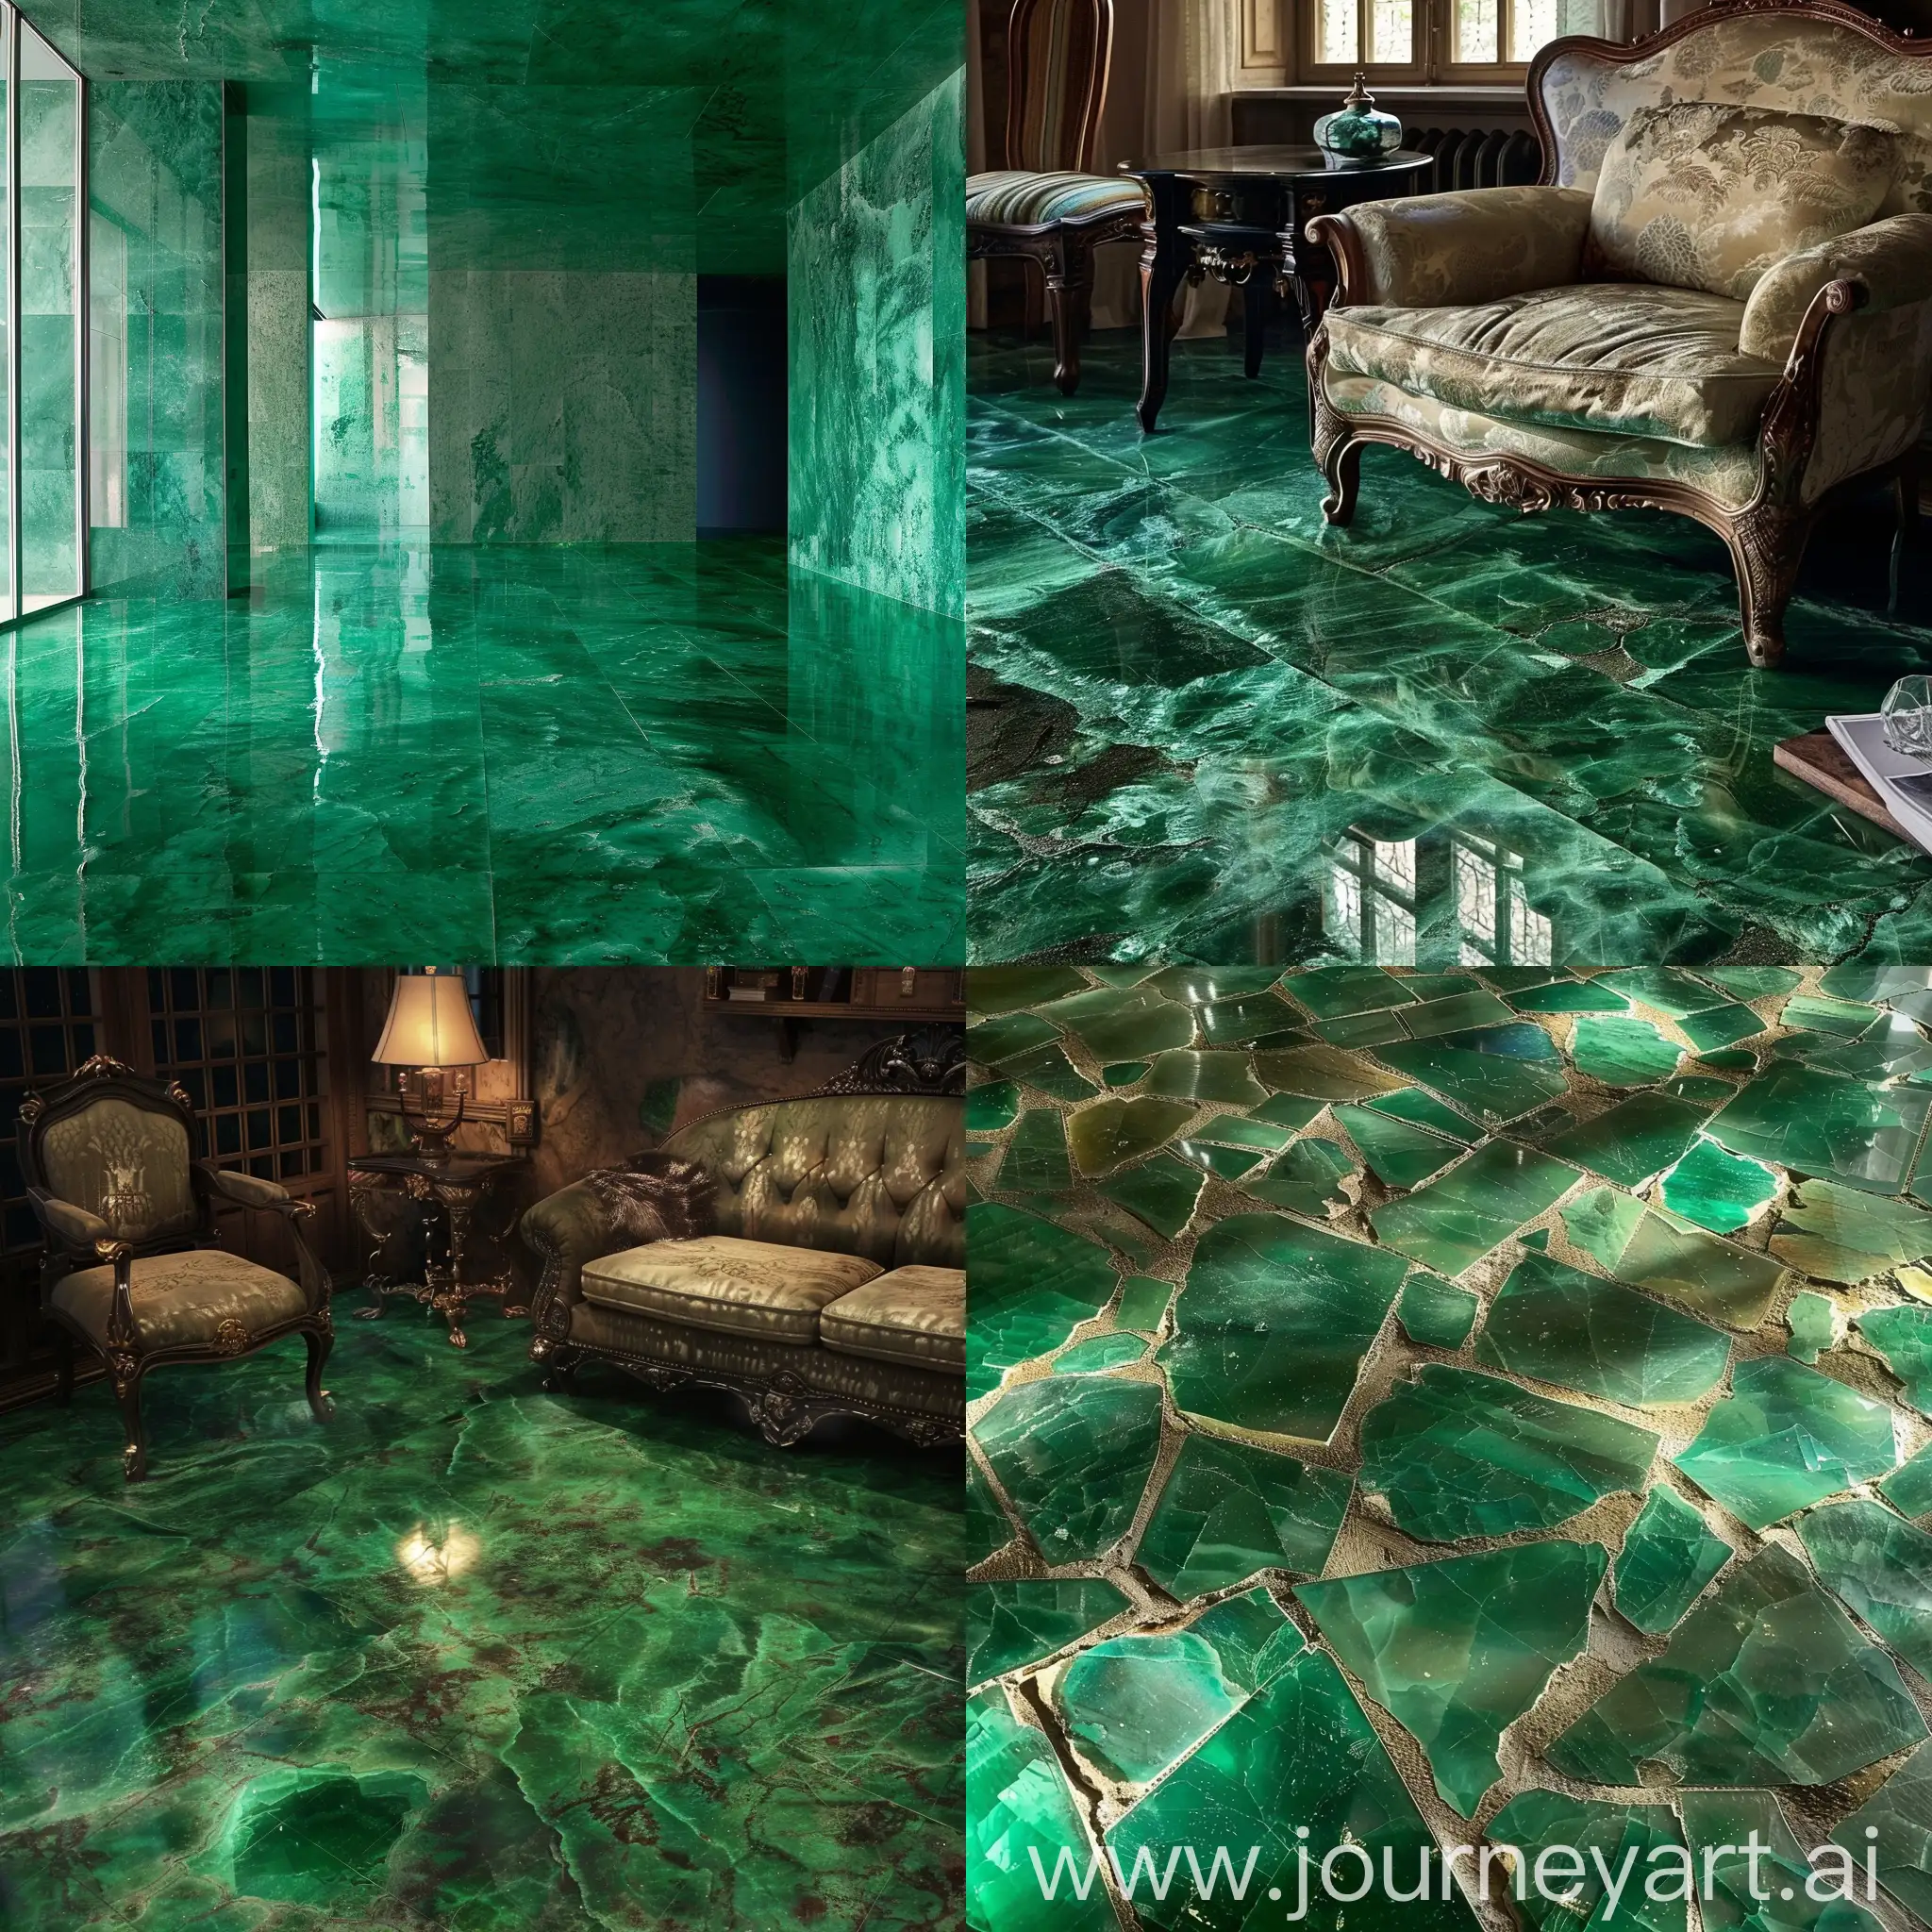 Vibrant-Emerald-Floor-Artwork-Abstract-Geometric-Patterns